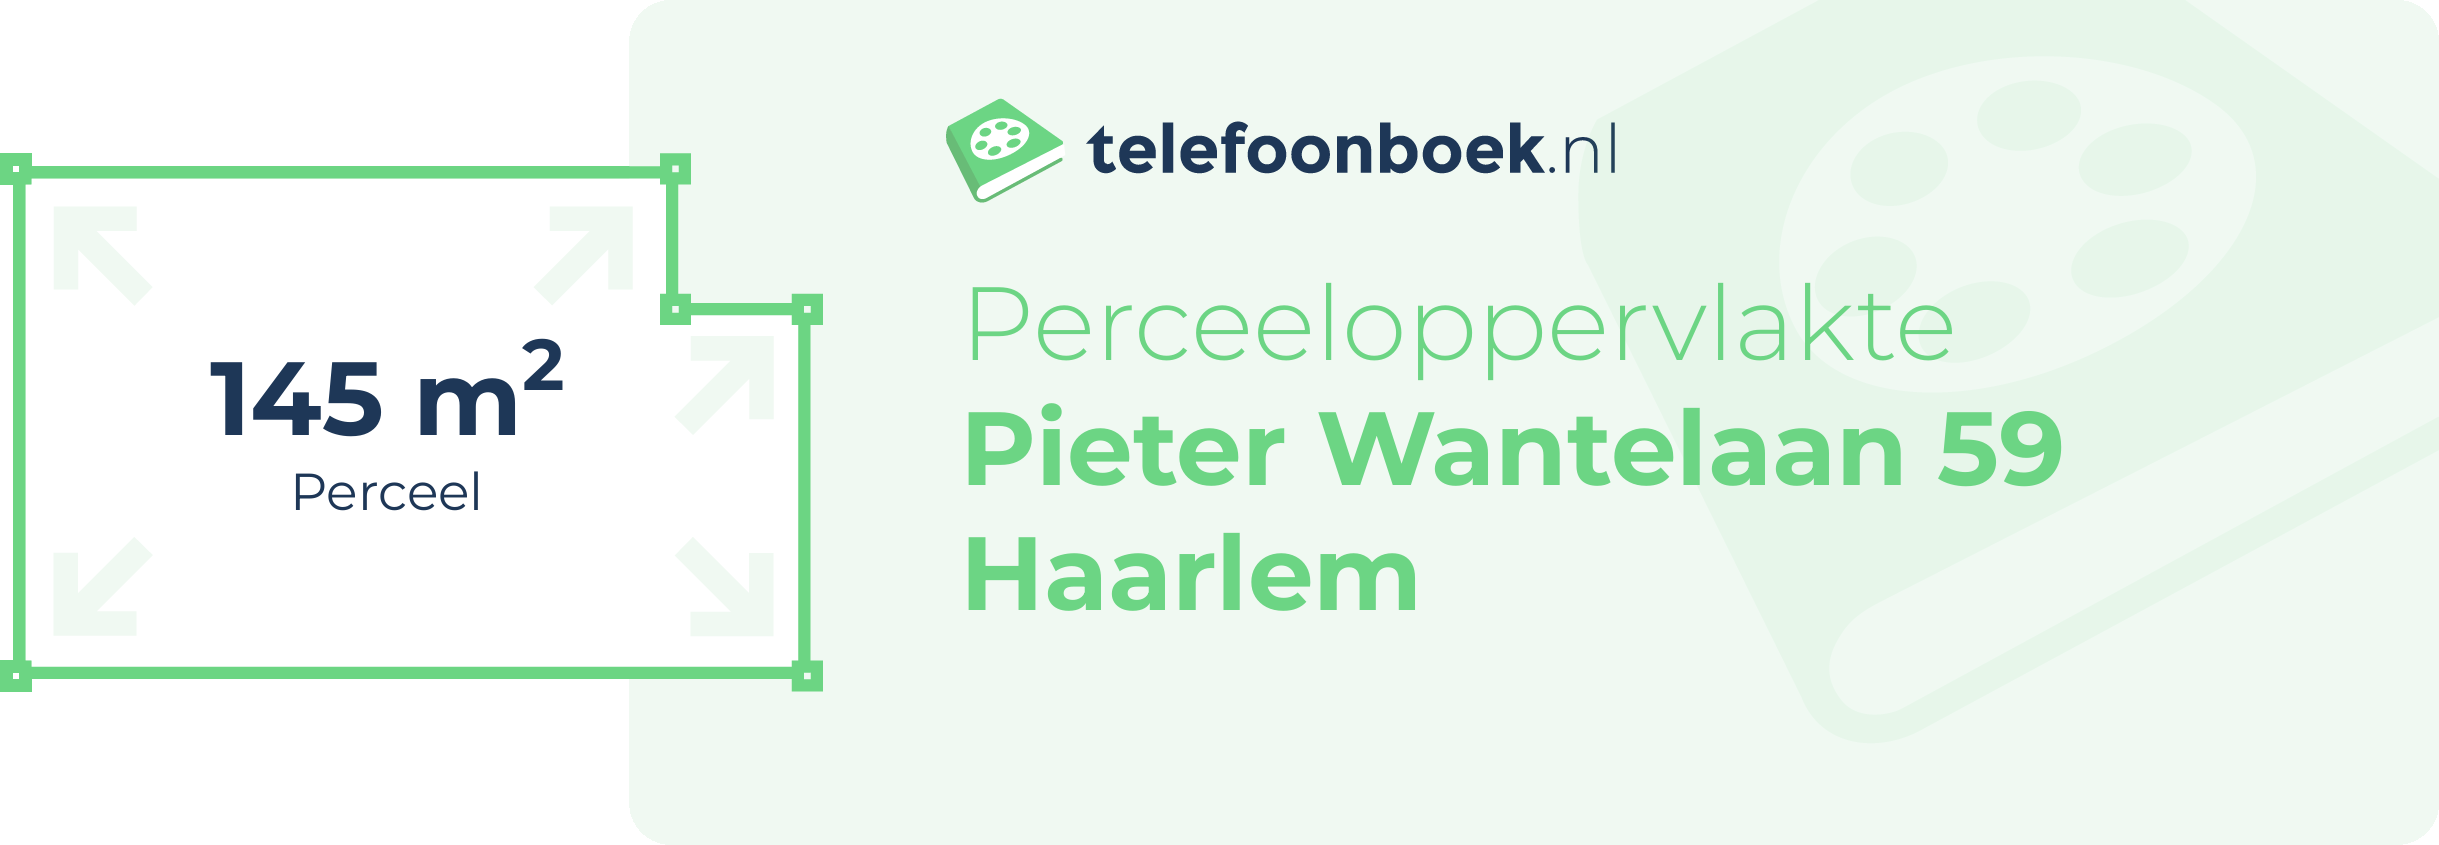 Perceeloppervlakte Pieter Wantelaan 59 Haarlem